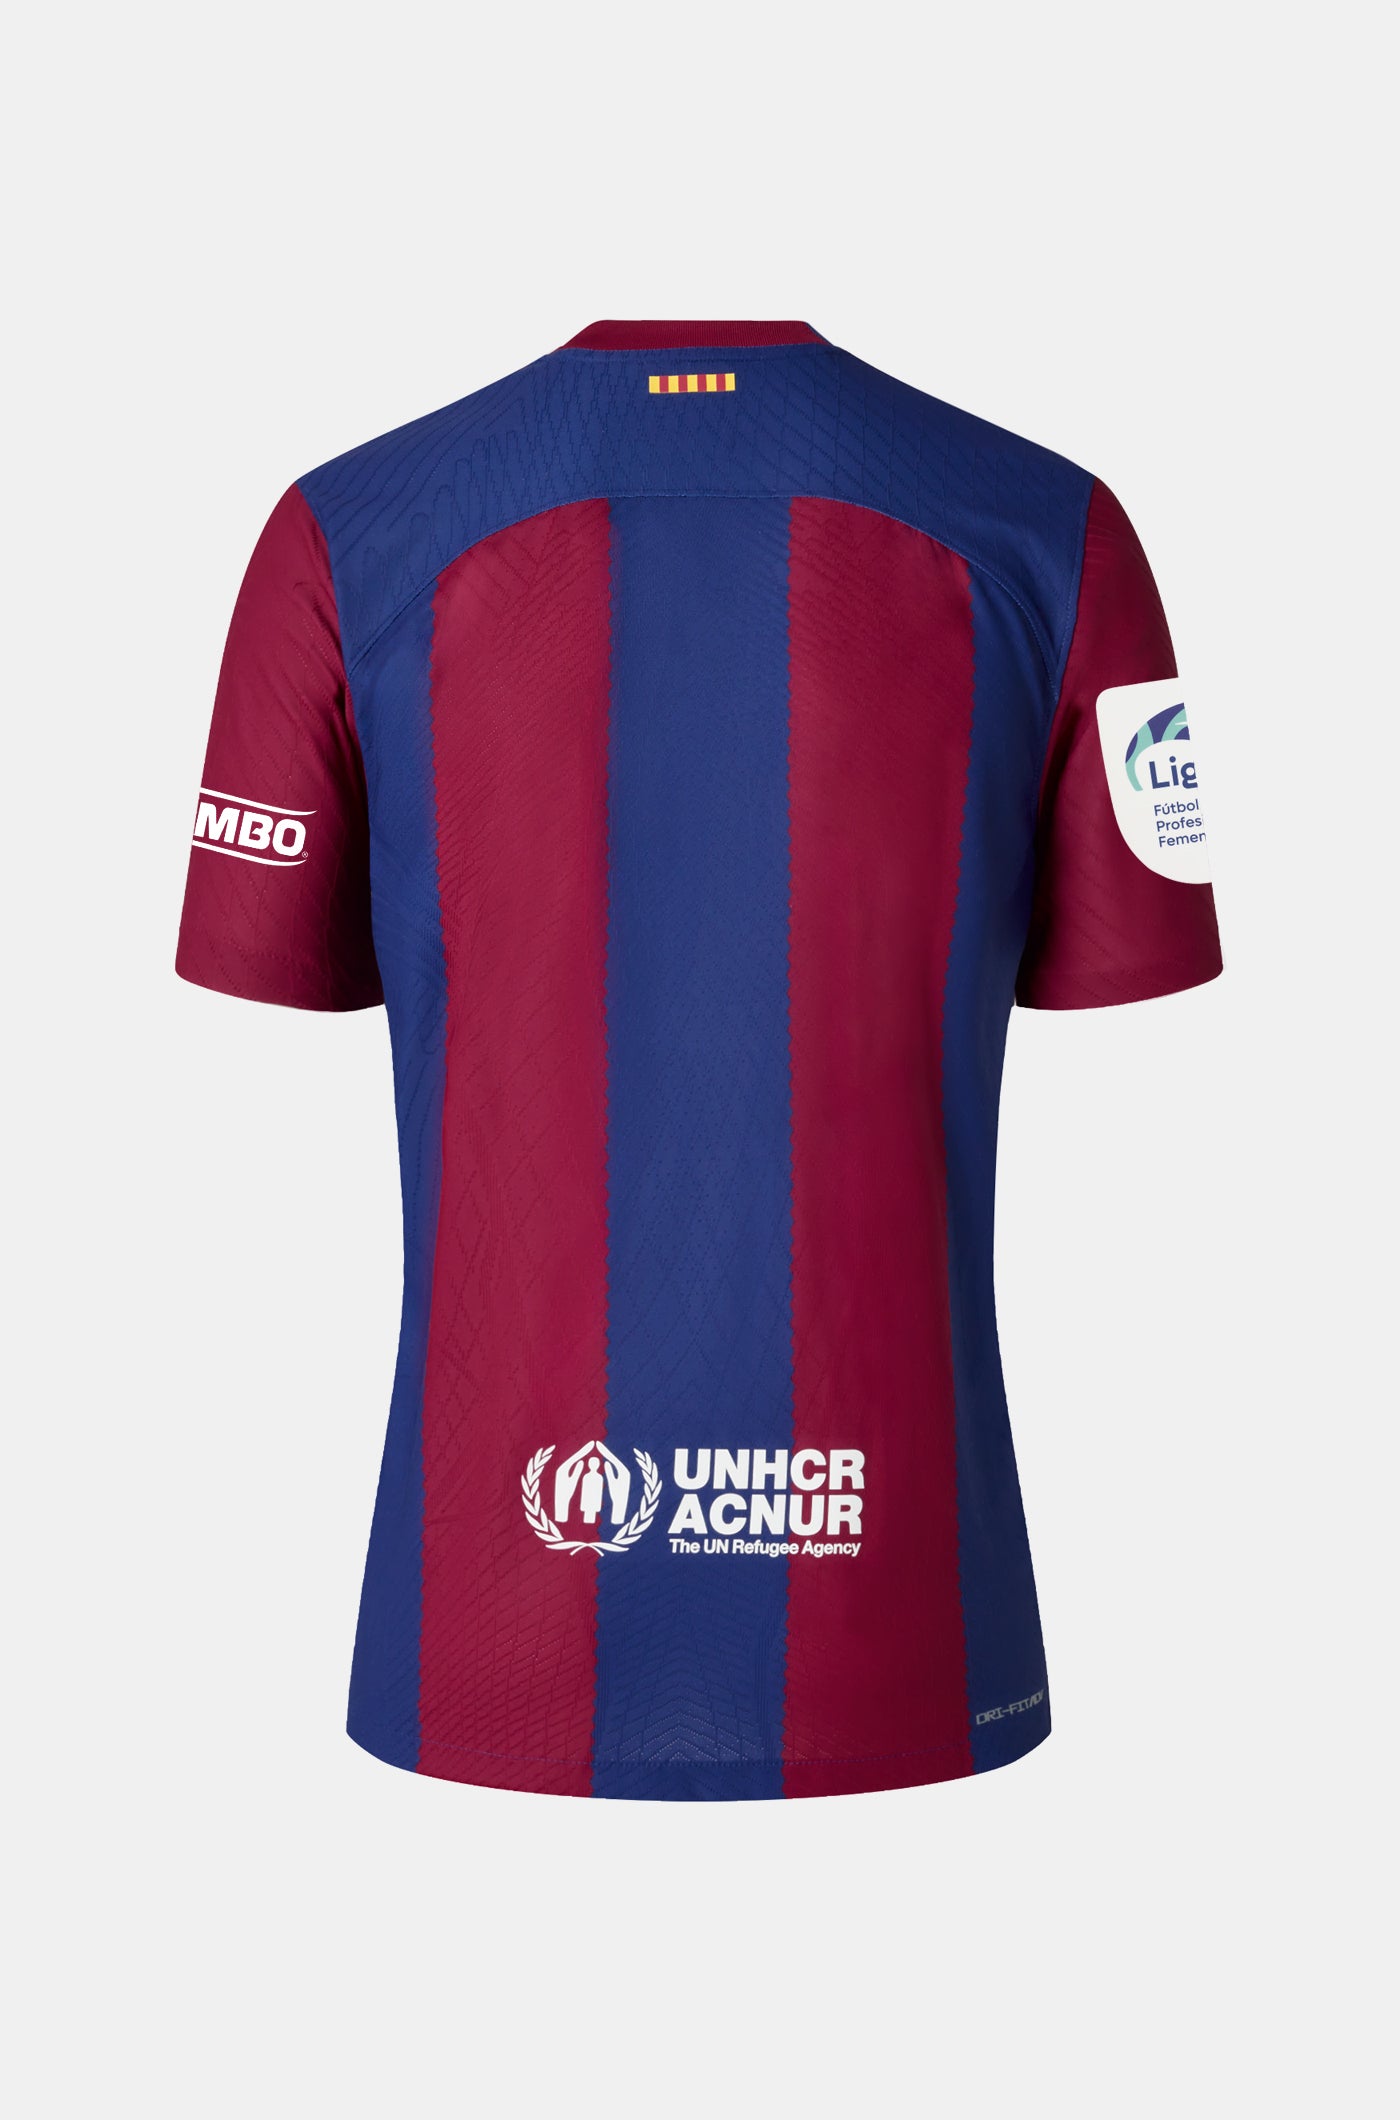 Liga F FC Barcelona home shirt 23/24 - Women